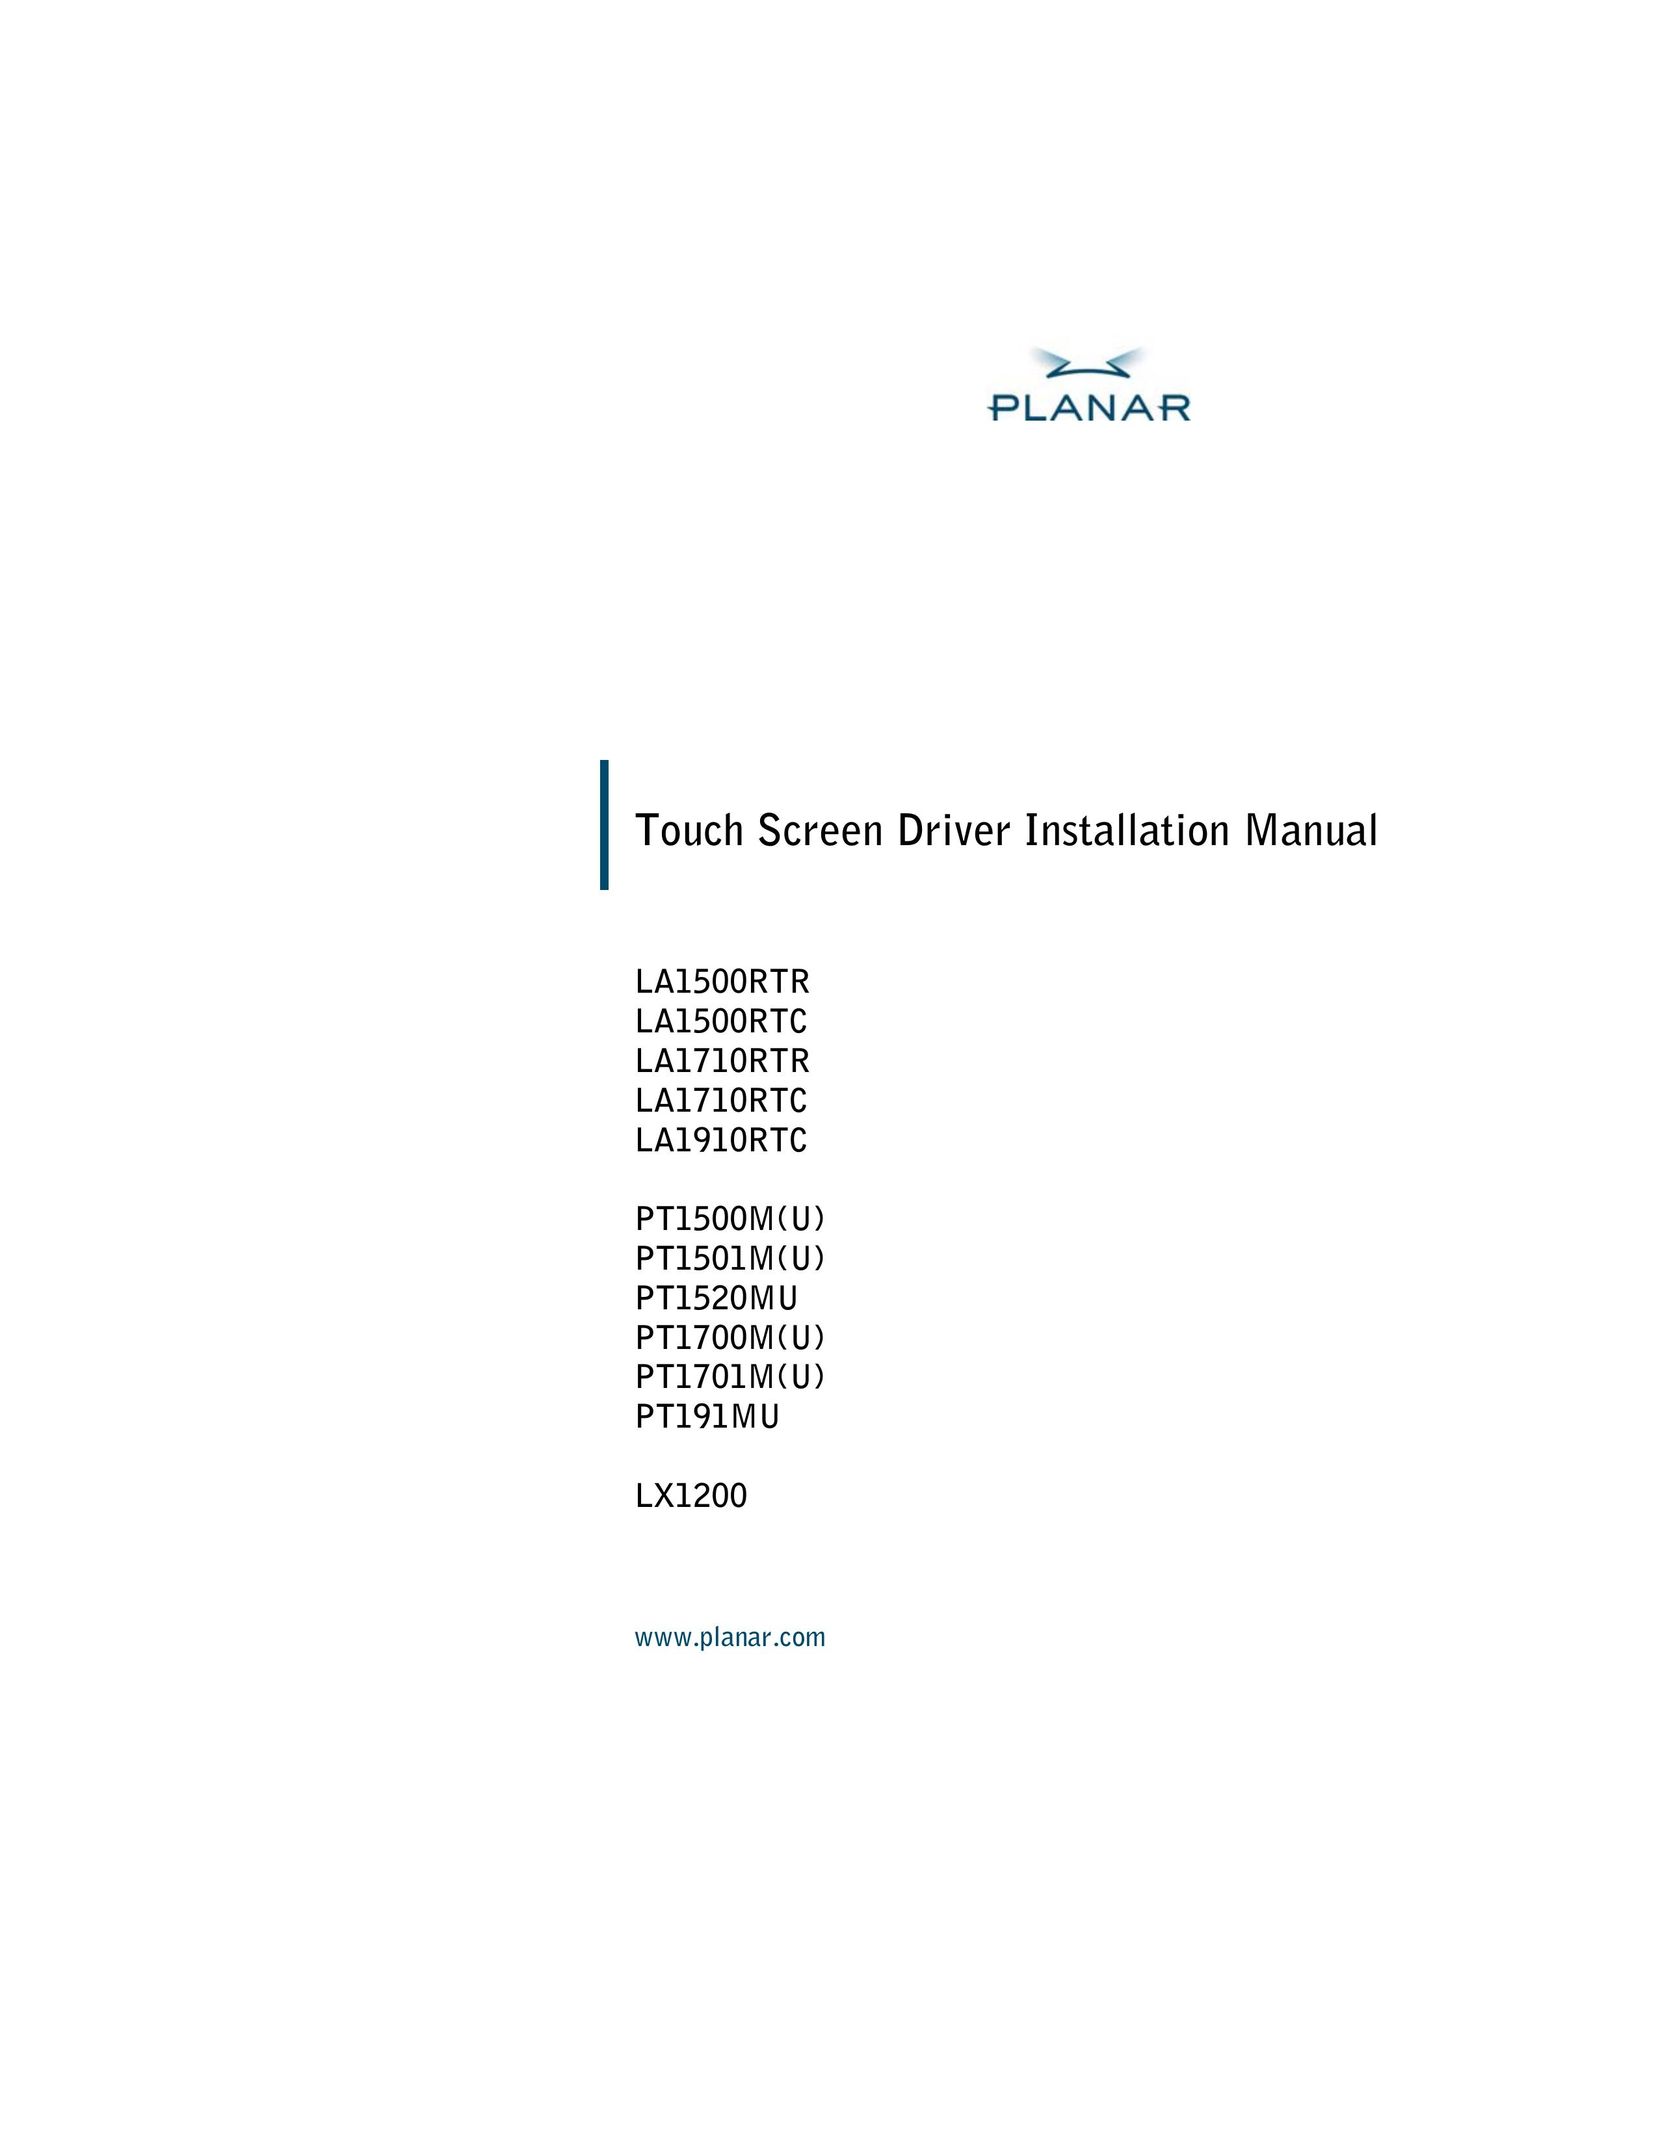 Planar PT1520MU Power Screwdriver User Manual